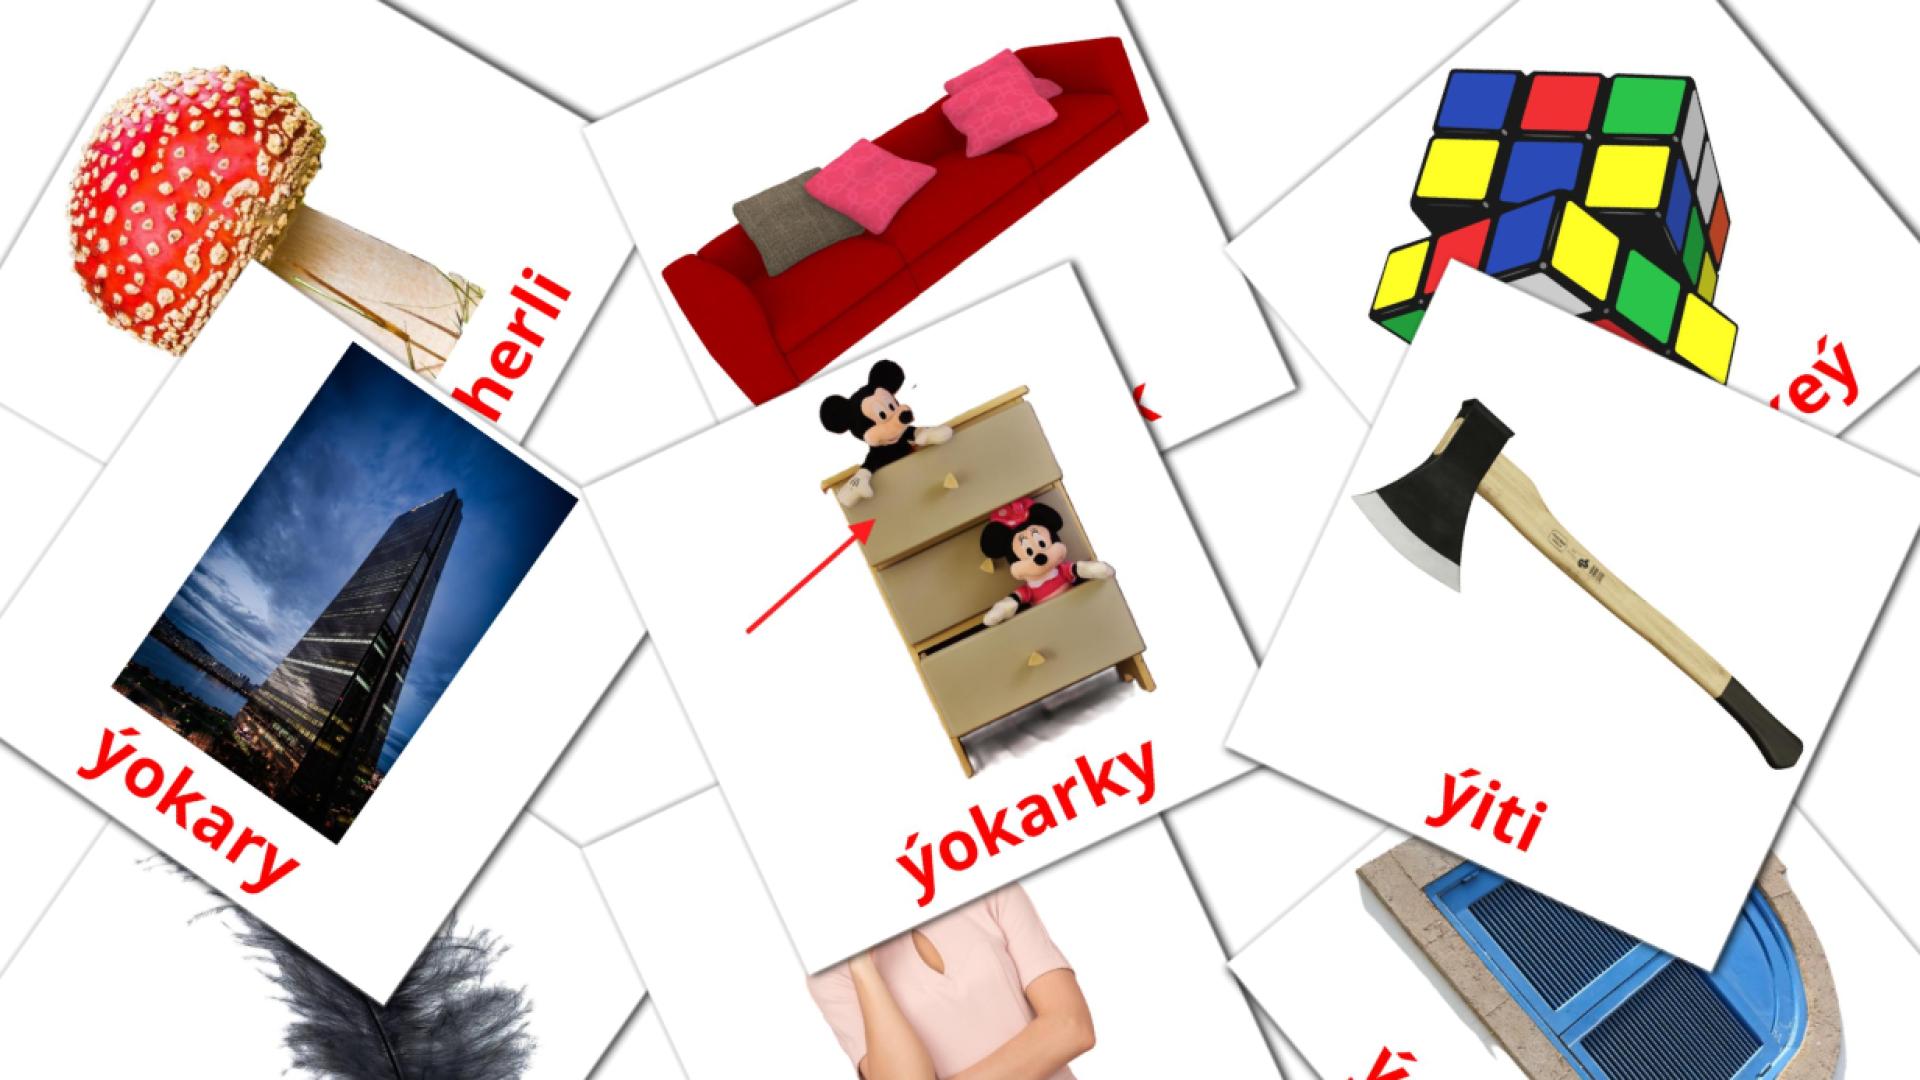 Sypatlar turkmen vocabulary flashcards